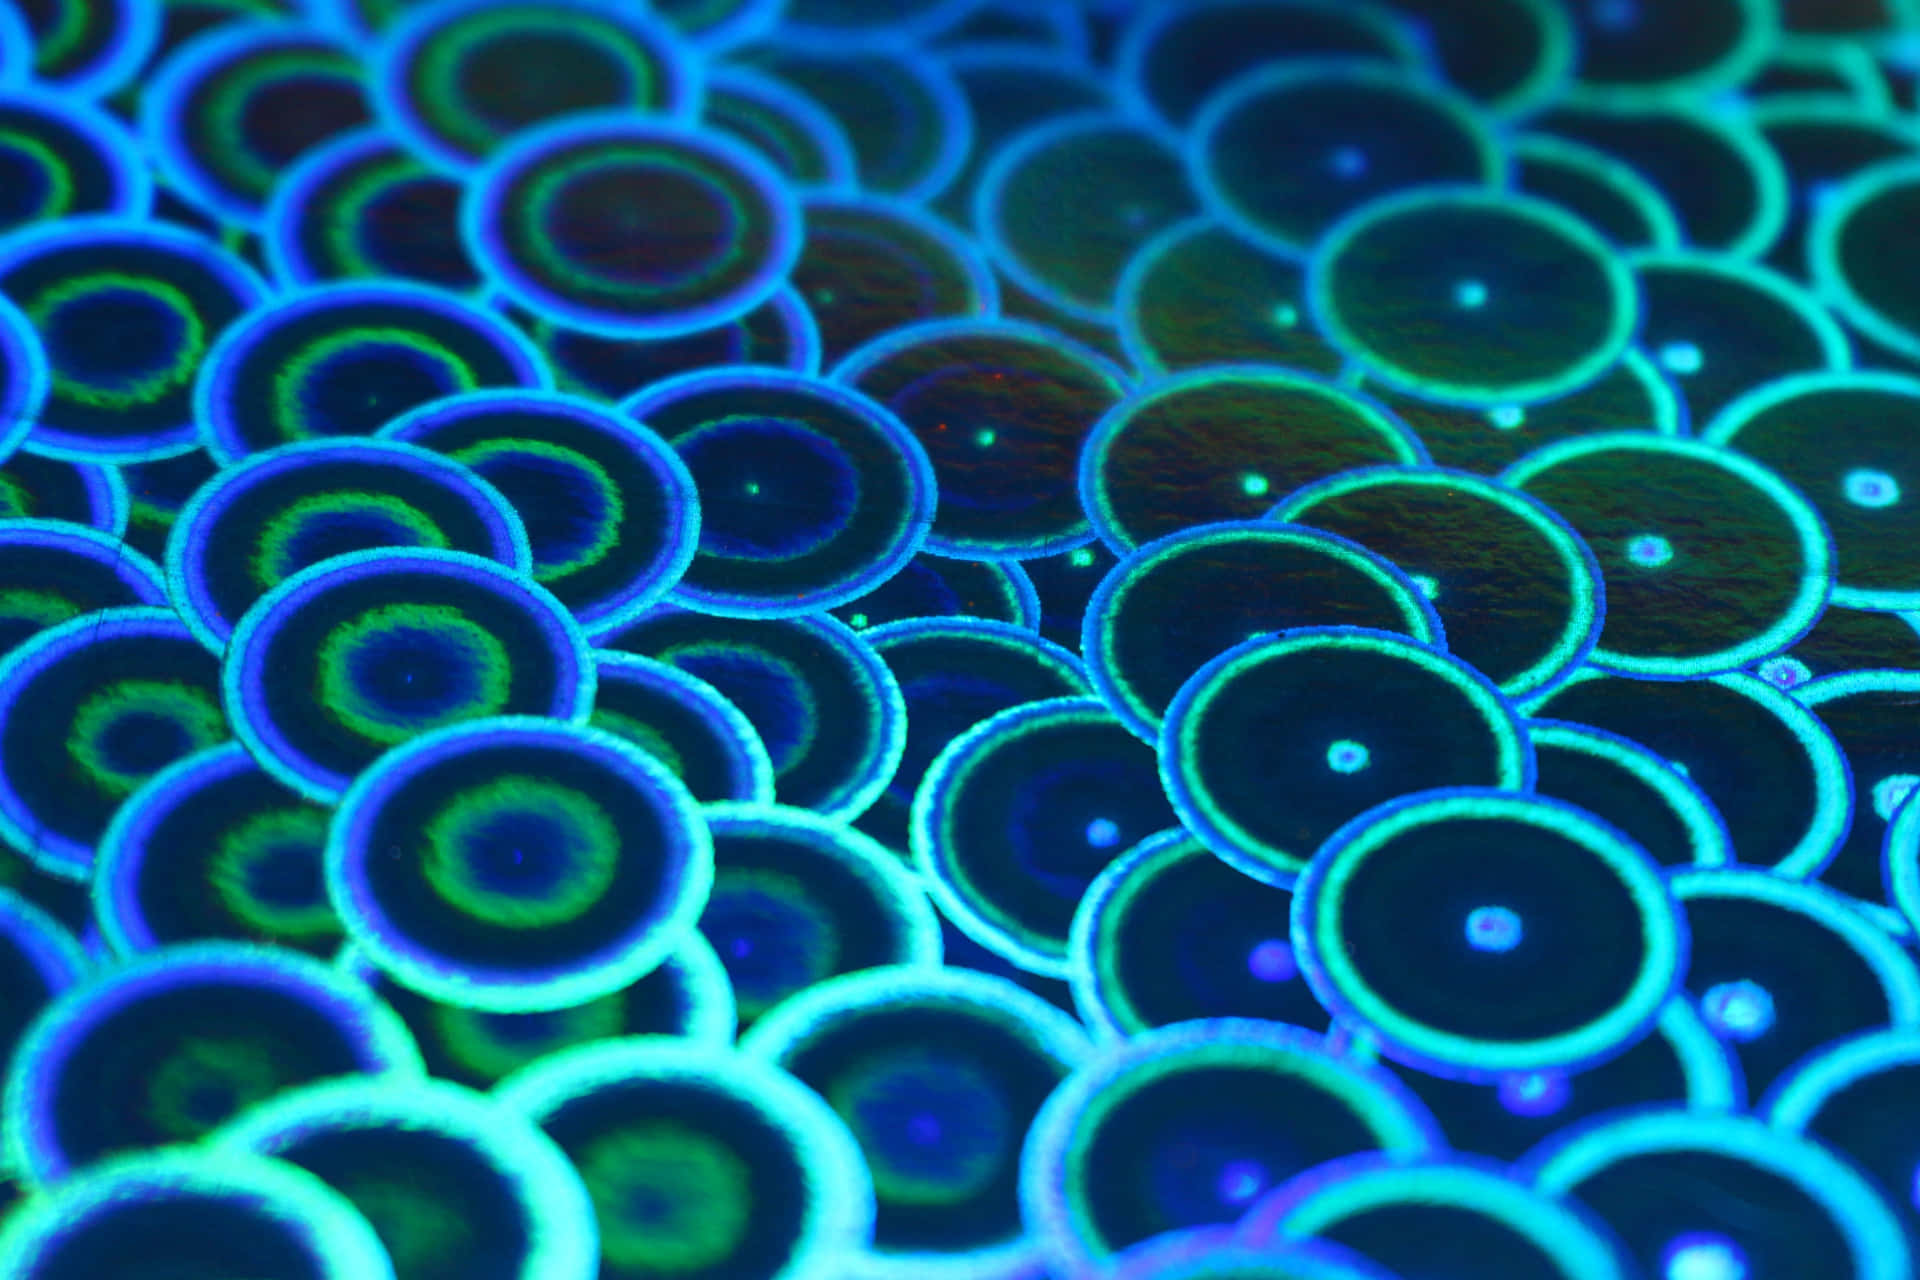 a close up of blue and green circles